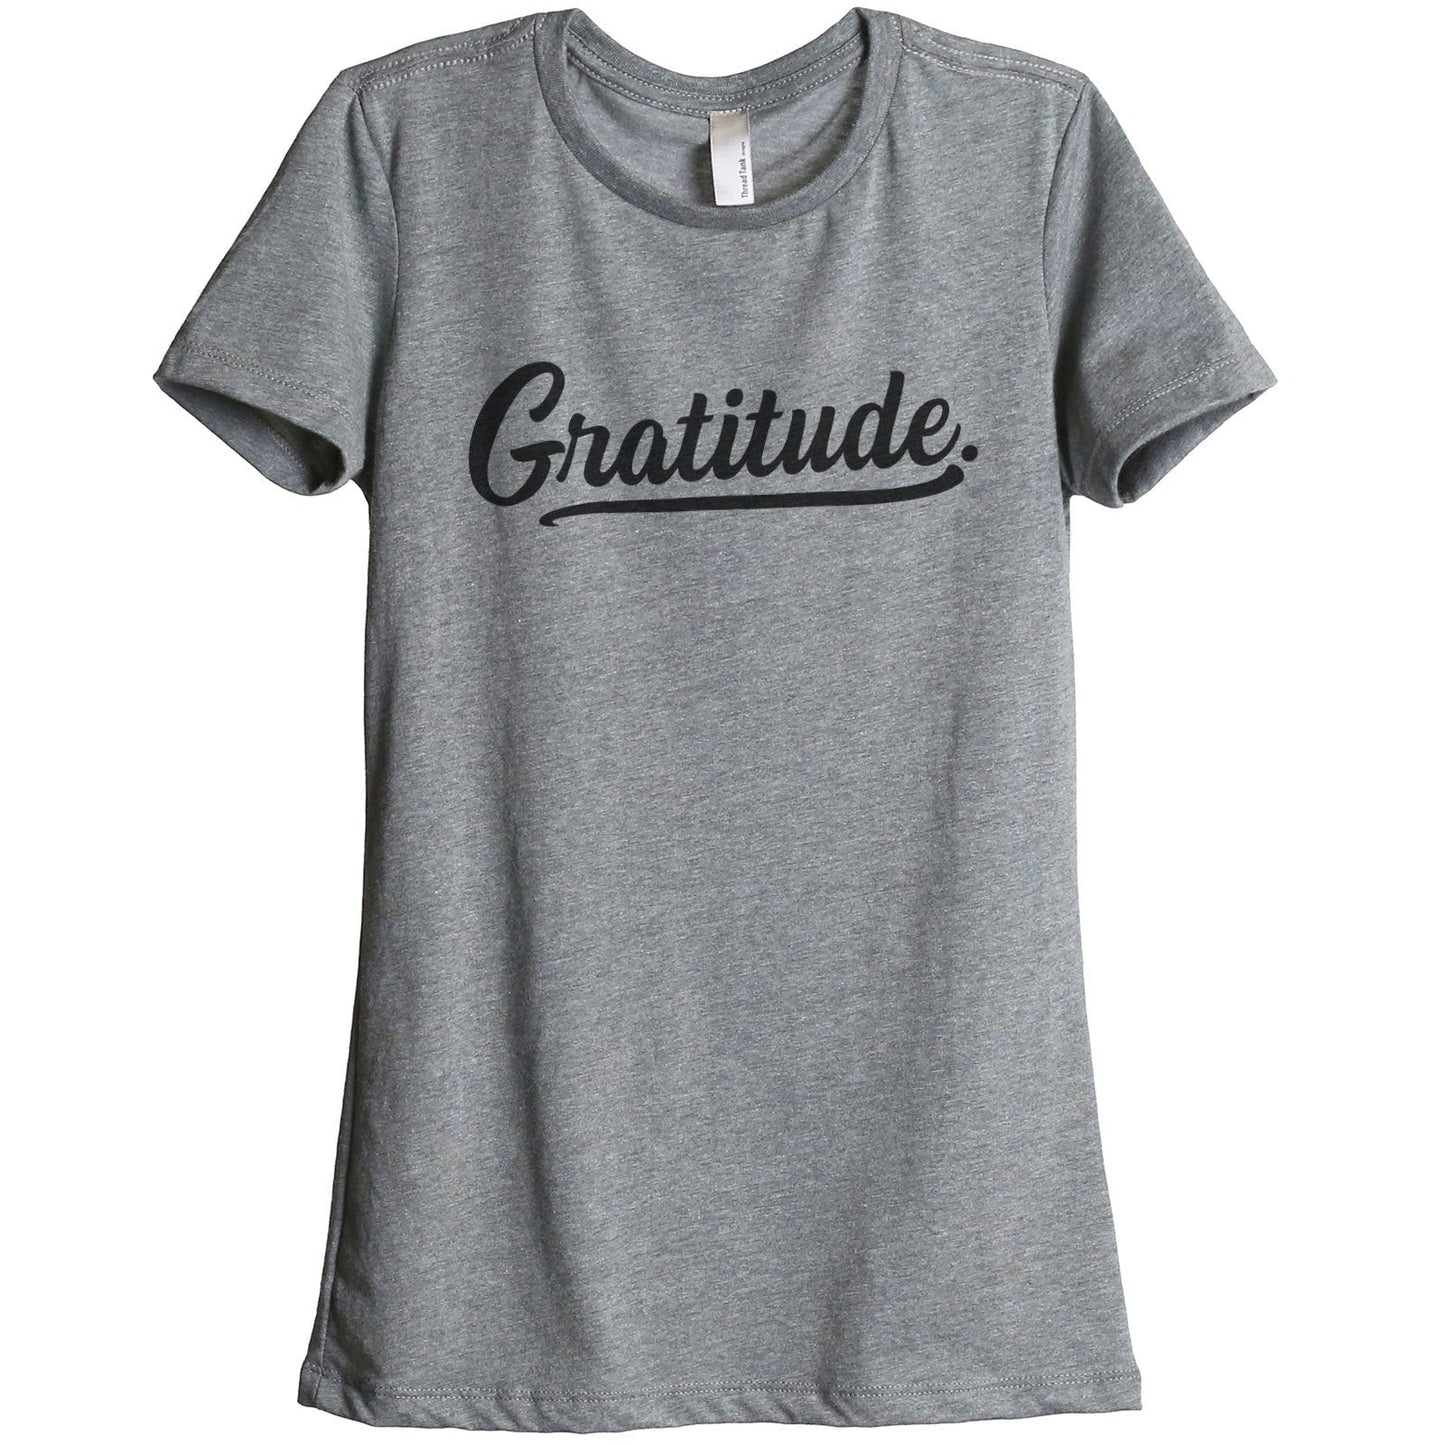 Gratitude Women's Relaxed Crewneck T-Shirt Top Tee Heather Grey